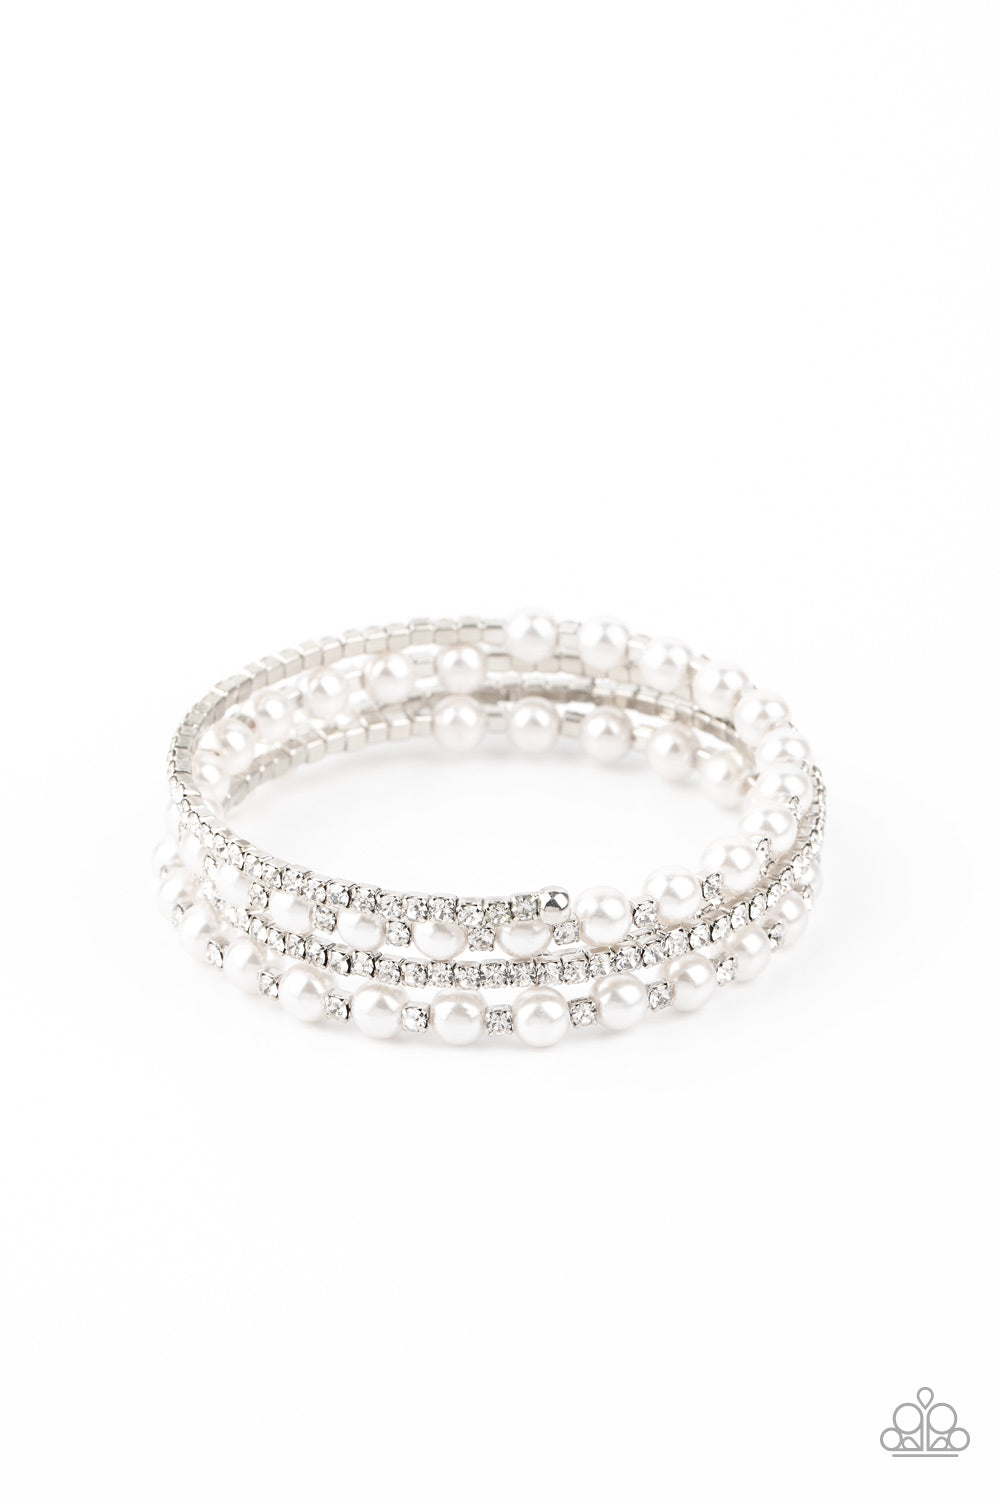 Starry Strut - white - Paparazzi bracelet – JewelryBlingThing